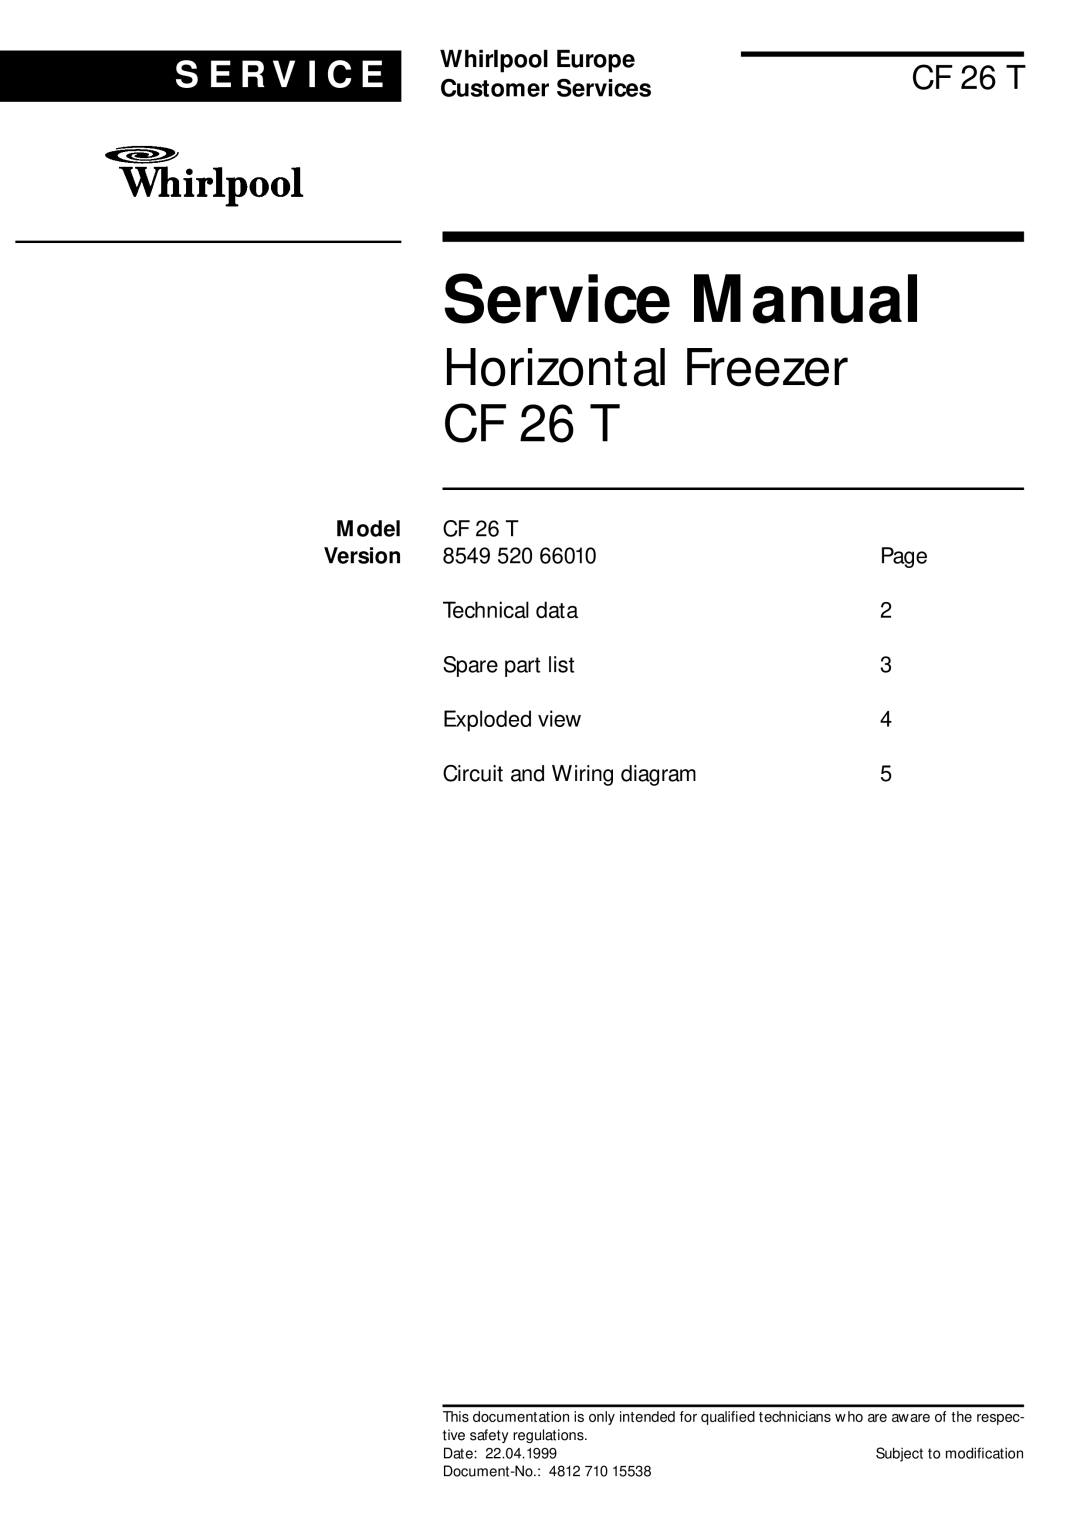 Whirlpool service manual Model, Horizontal Freezer CF 26 T, S E R V I C E, Whirlpool Europe, Customer Services 